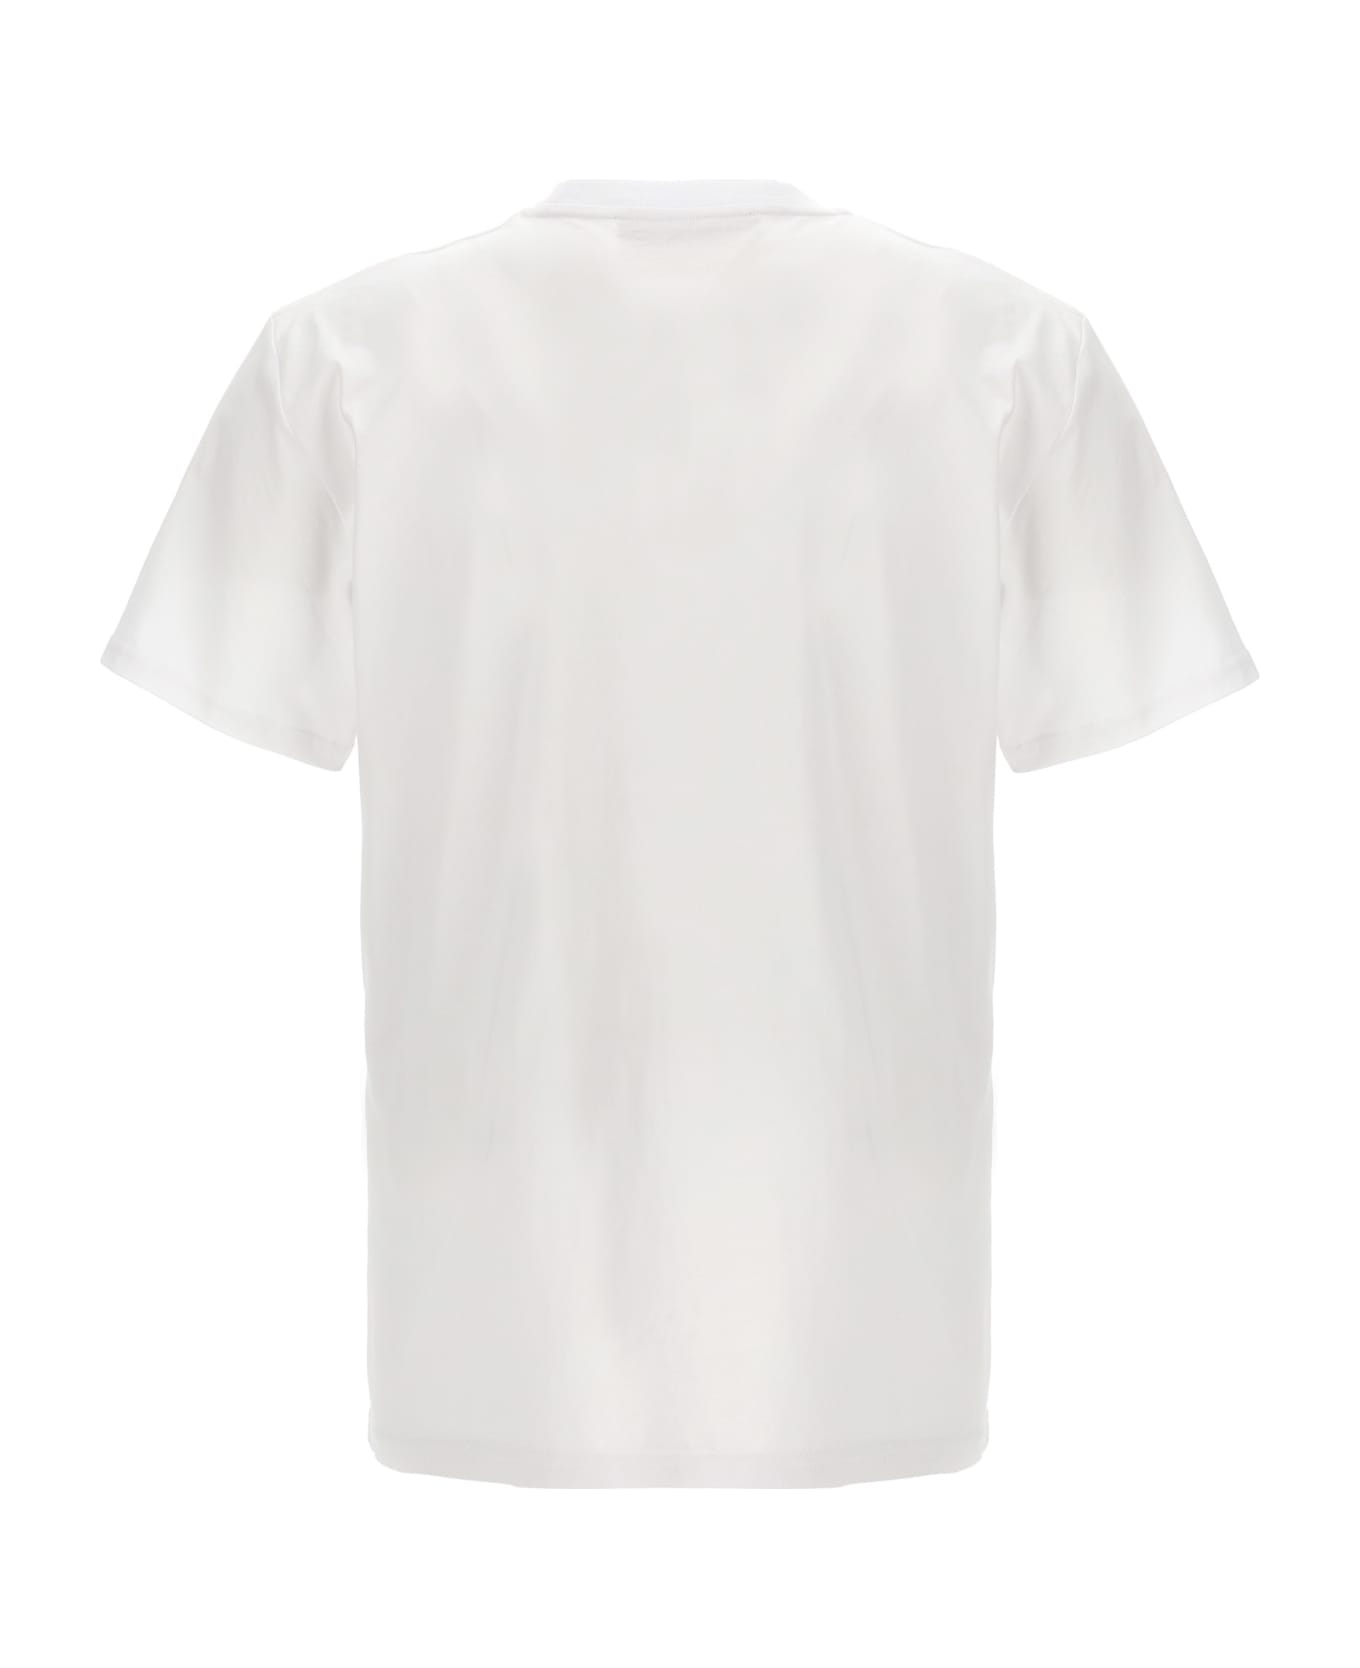 Neil Barrett Logo Embroidery T-shirt - White/Black